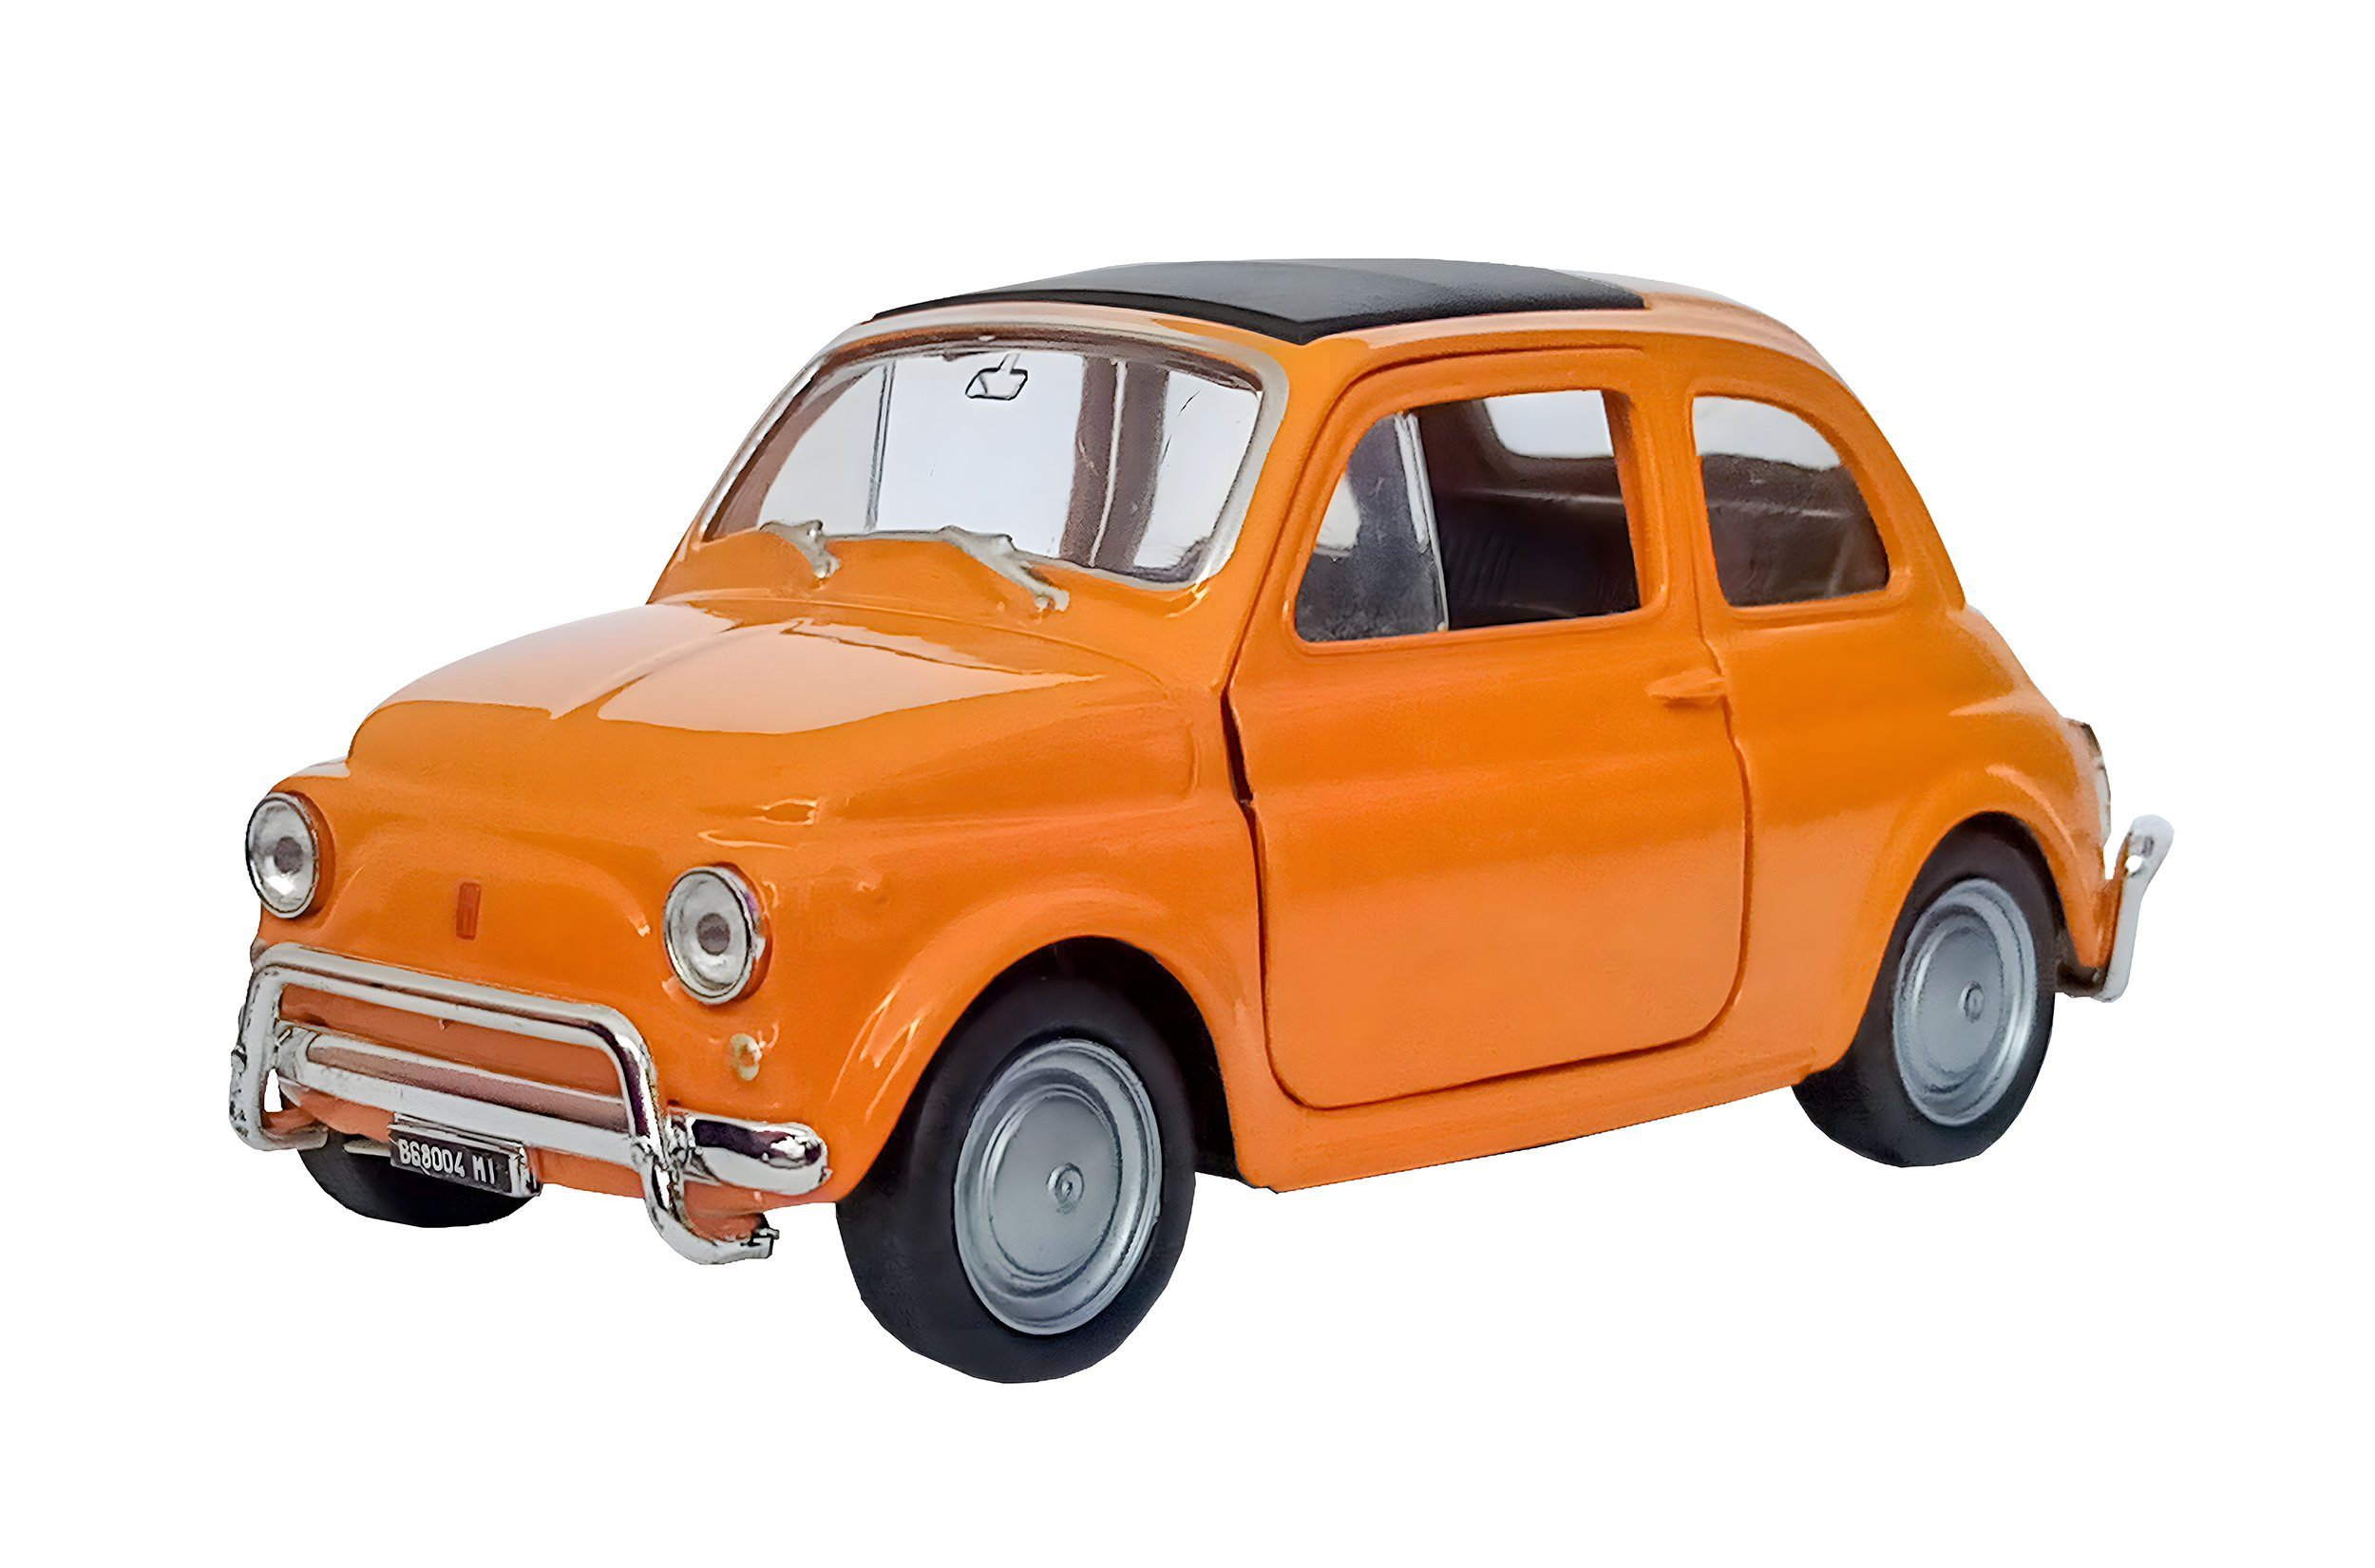 Welly Modellauto FIAT NUOVA 500 Modellauto Metall Rückzug Modell Auto 83  (Orange), Spielzeugauto WELLY Kinder Geschenk